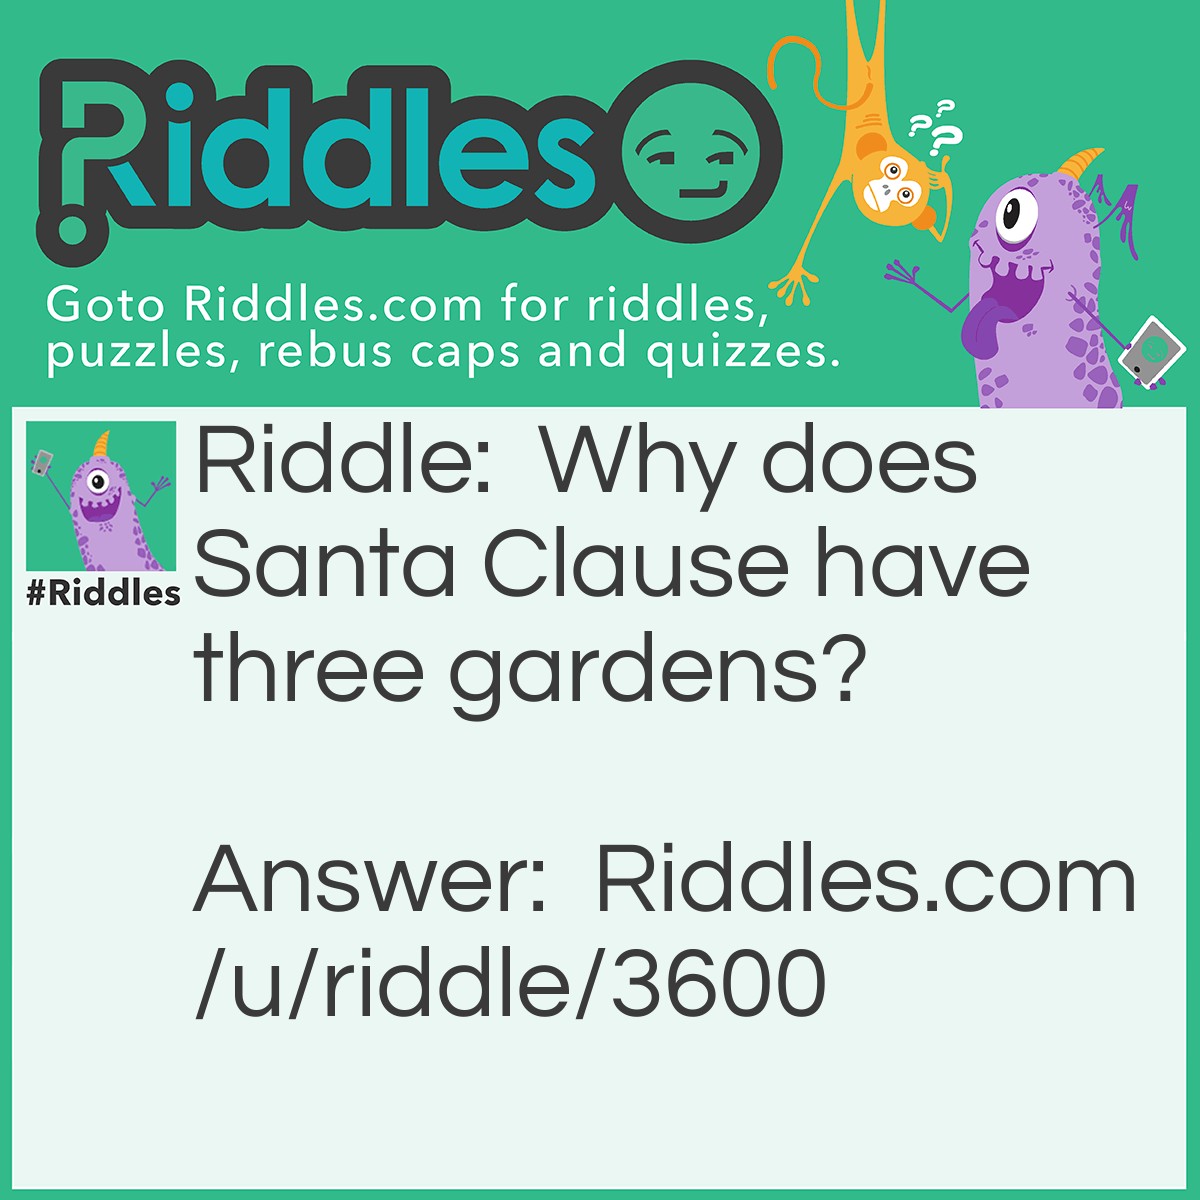 Riddle: Why does Santa Clause have three gardens? Answer: So he can Ho(e) Ho(e) Ho(e).